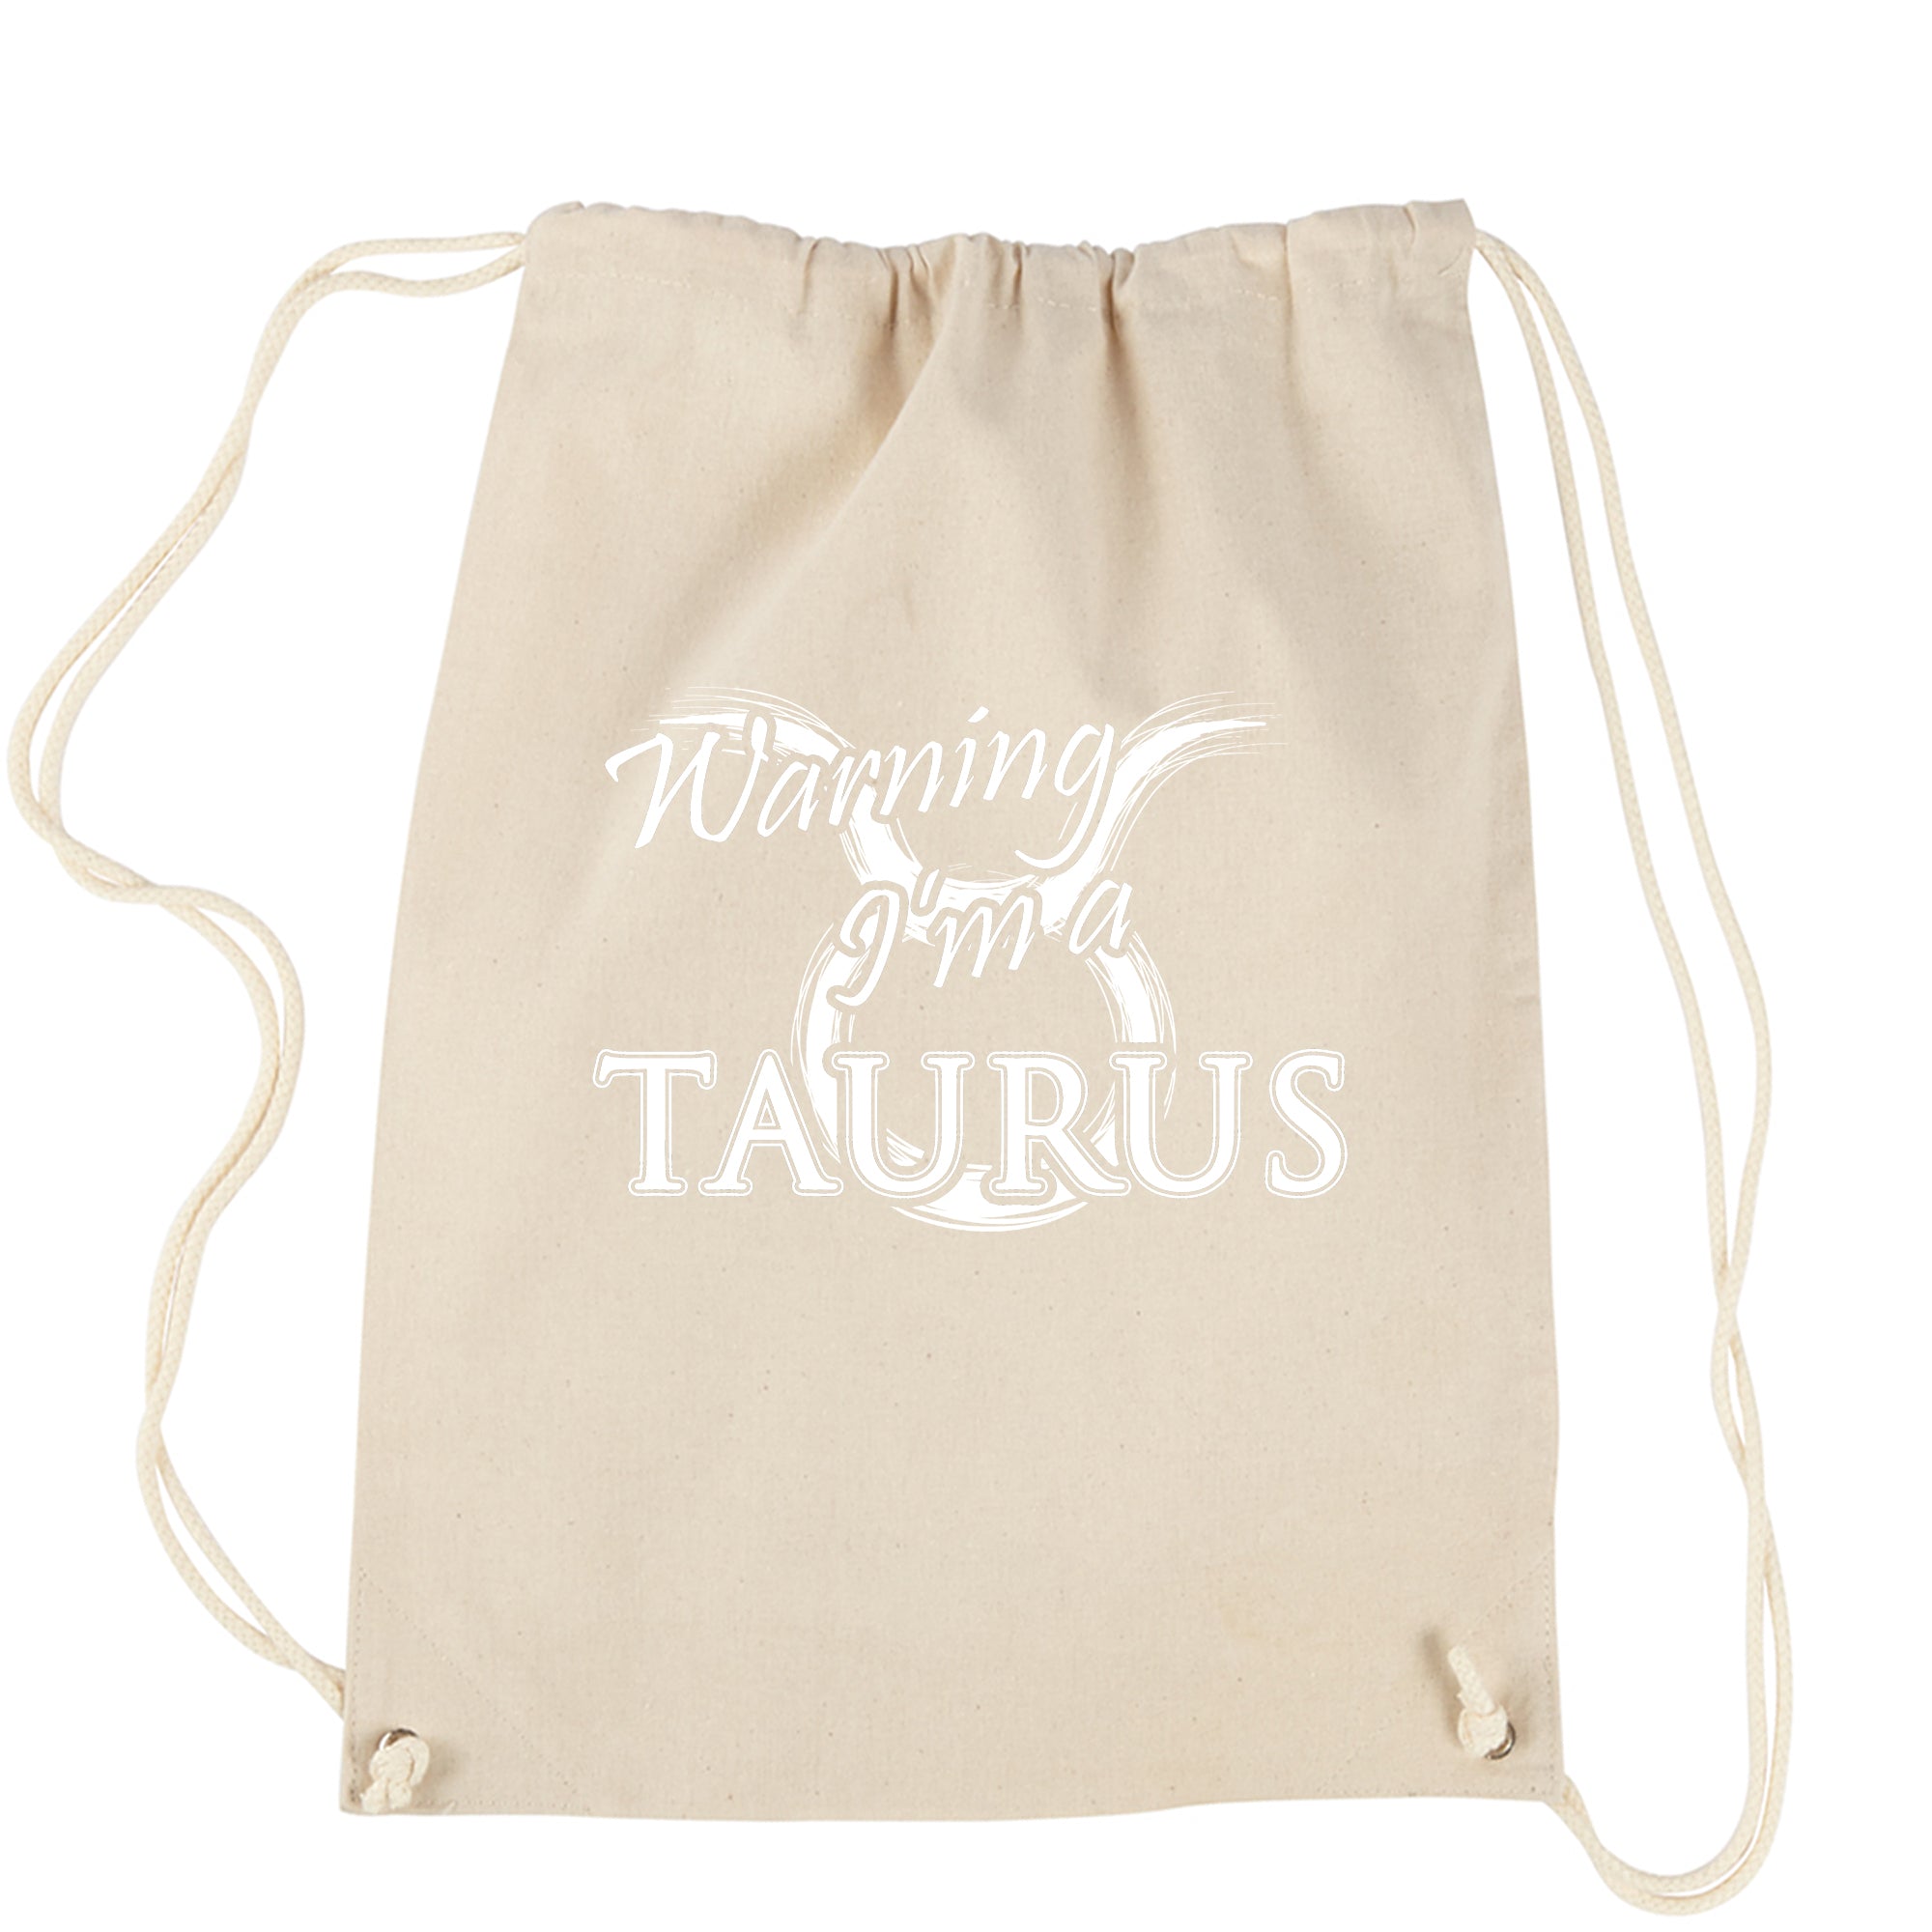 Taurus Pride Astrology Zodiac Sign Drawstring Backpack